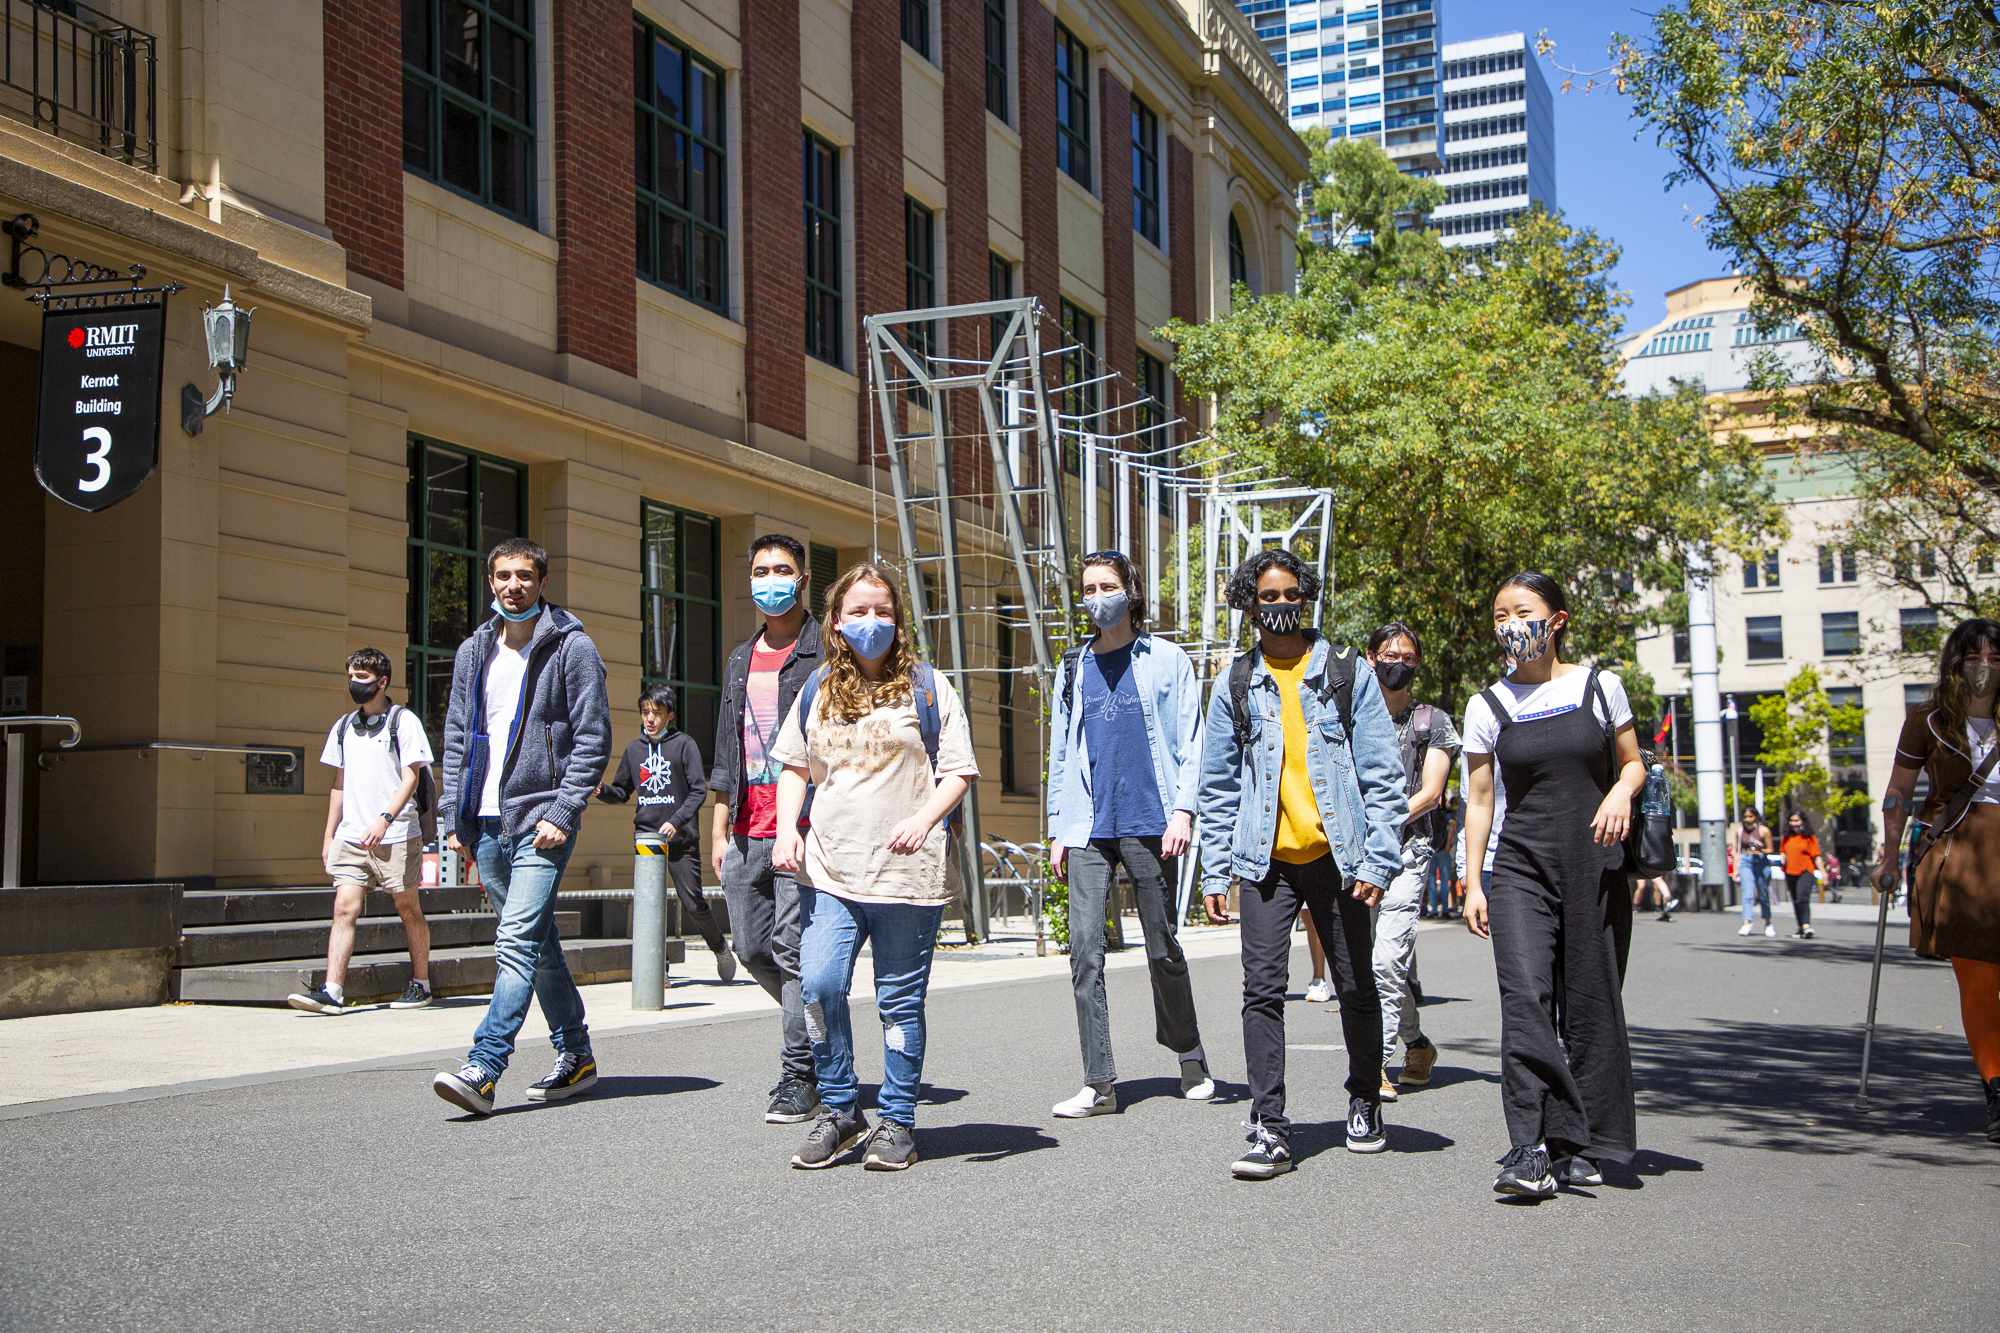 Students walking towards the camera, most wearing protective face masks.